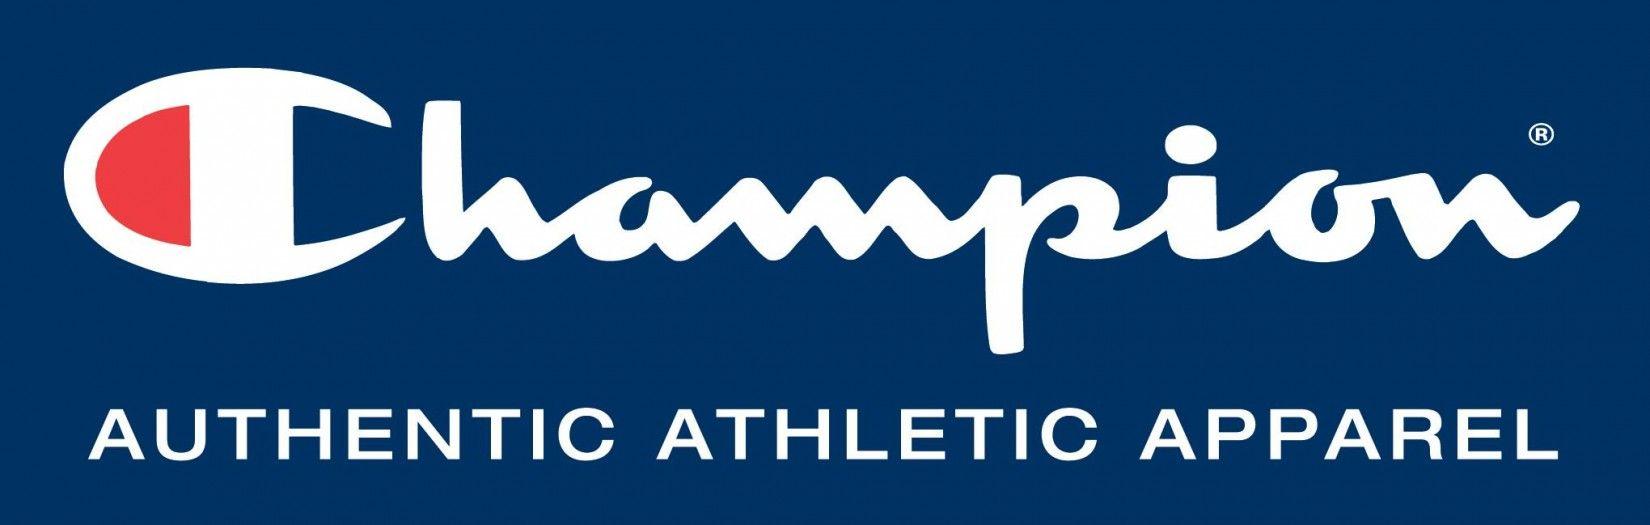 Champion Apparel Logo - Champion USA font - forum | dafont.com